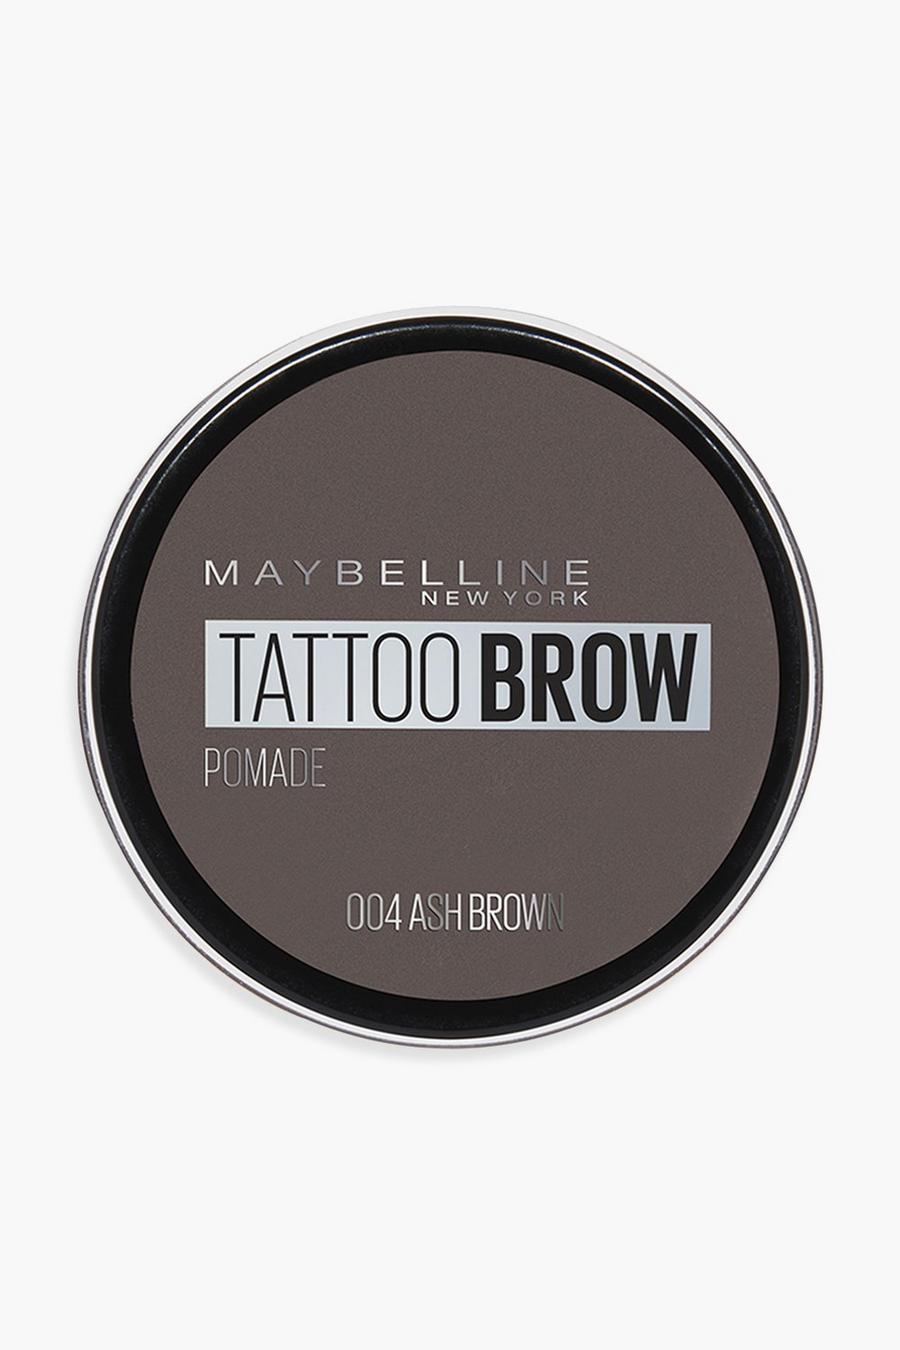 04 ash brown Maybelline Tattoo Brow Eyebrow Pomade